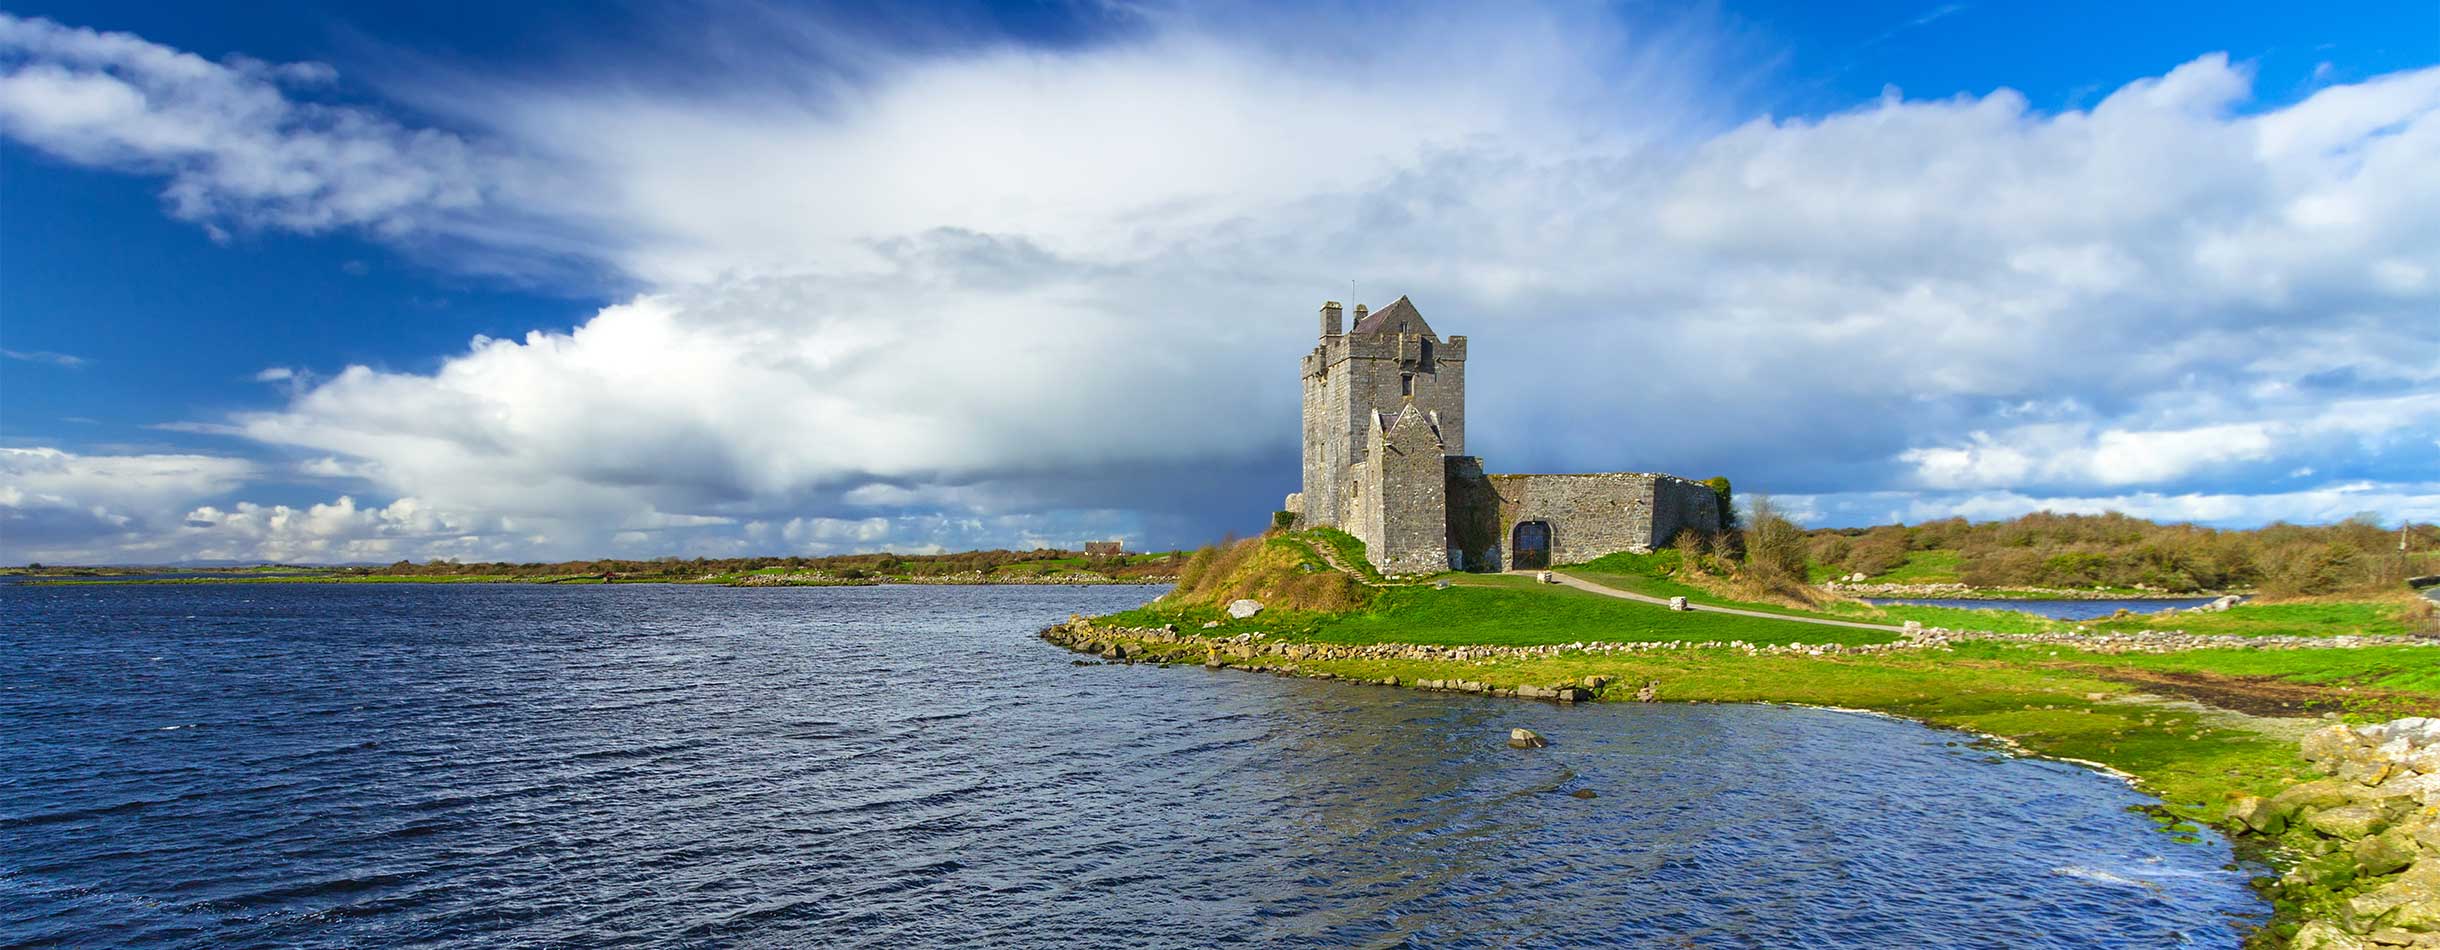 Ireland Galway Cd